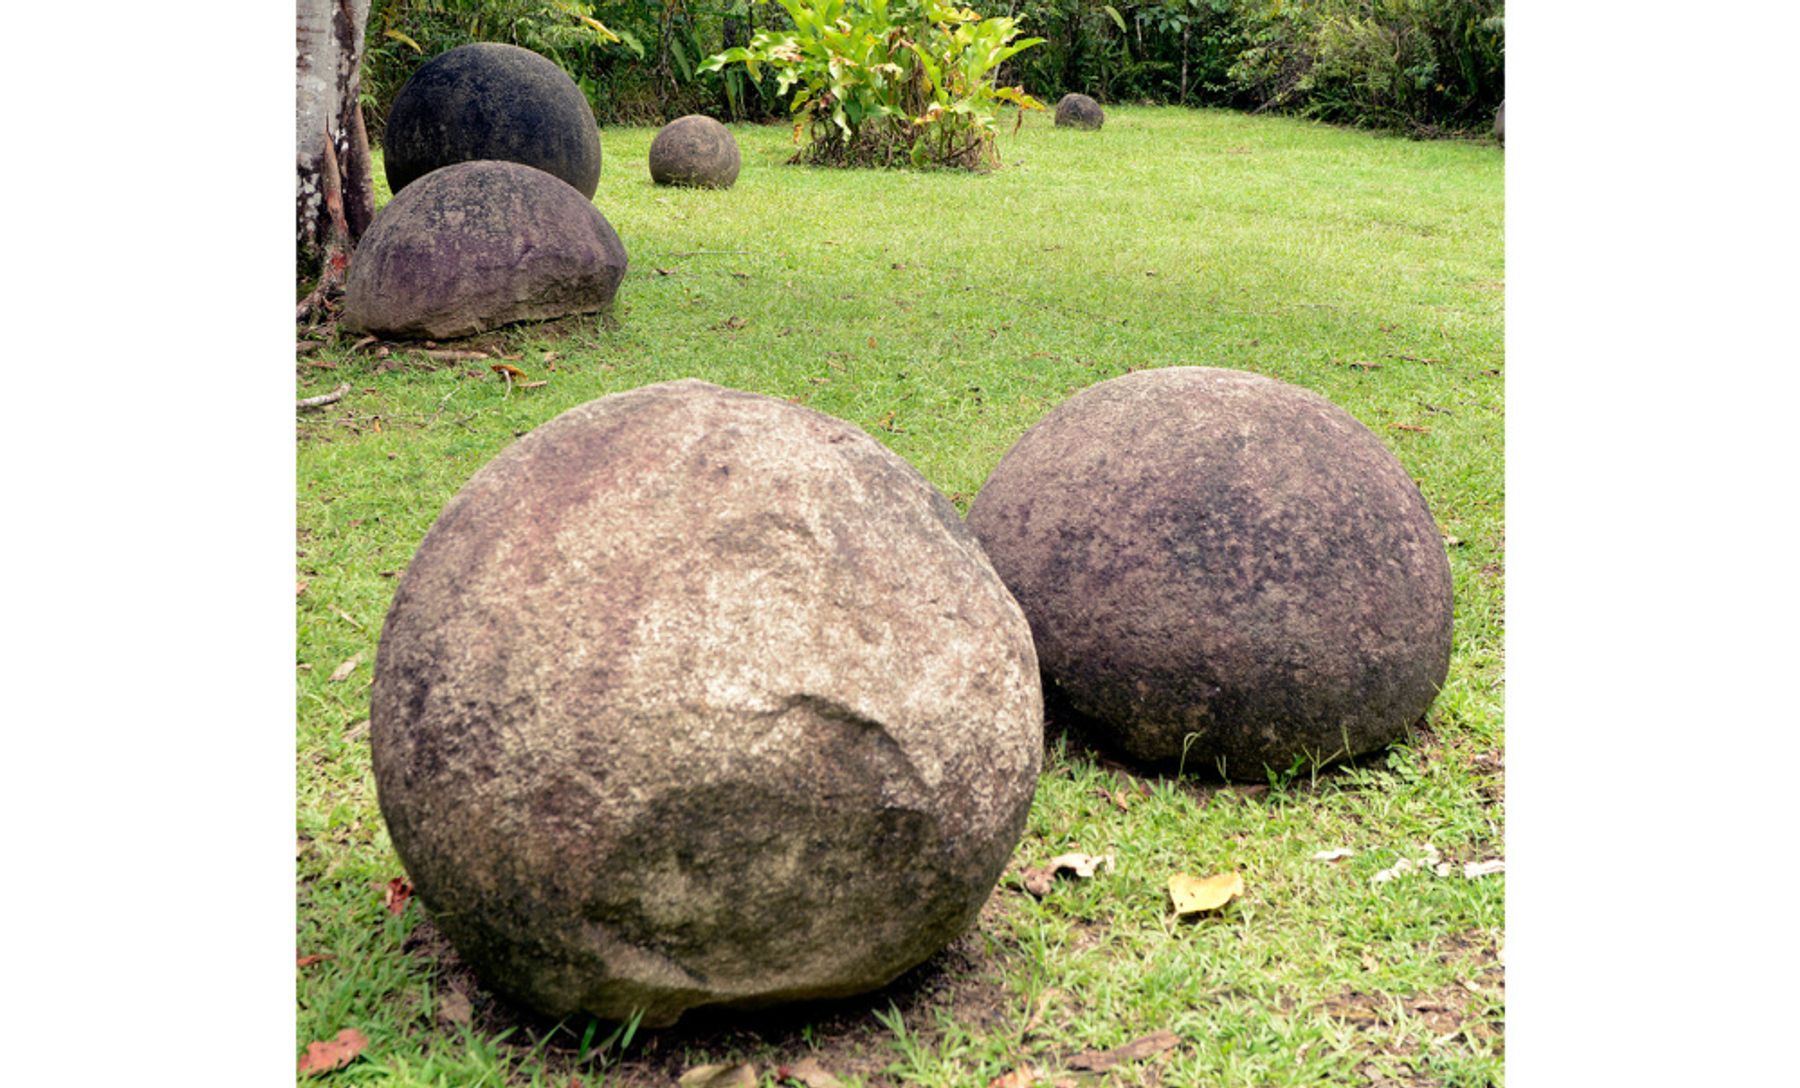 Diquís spheres to be declared UNESCO World Heritage site